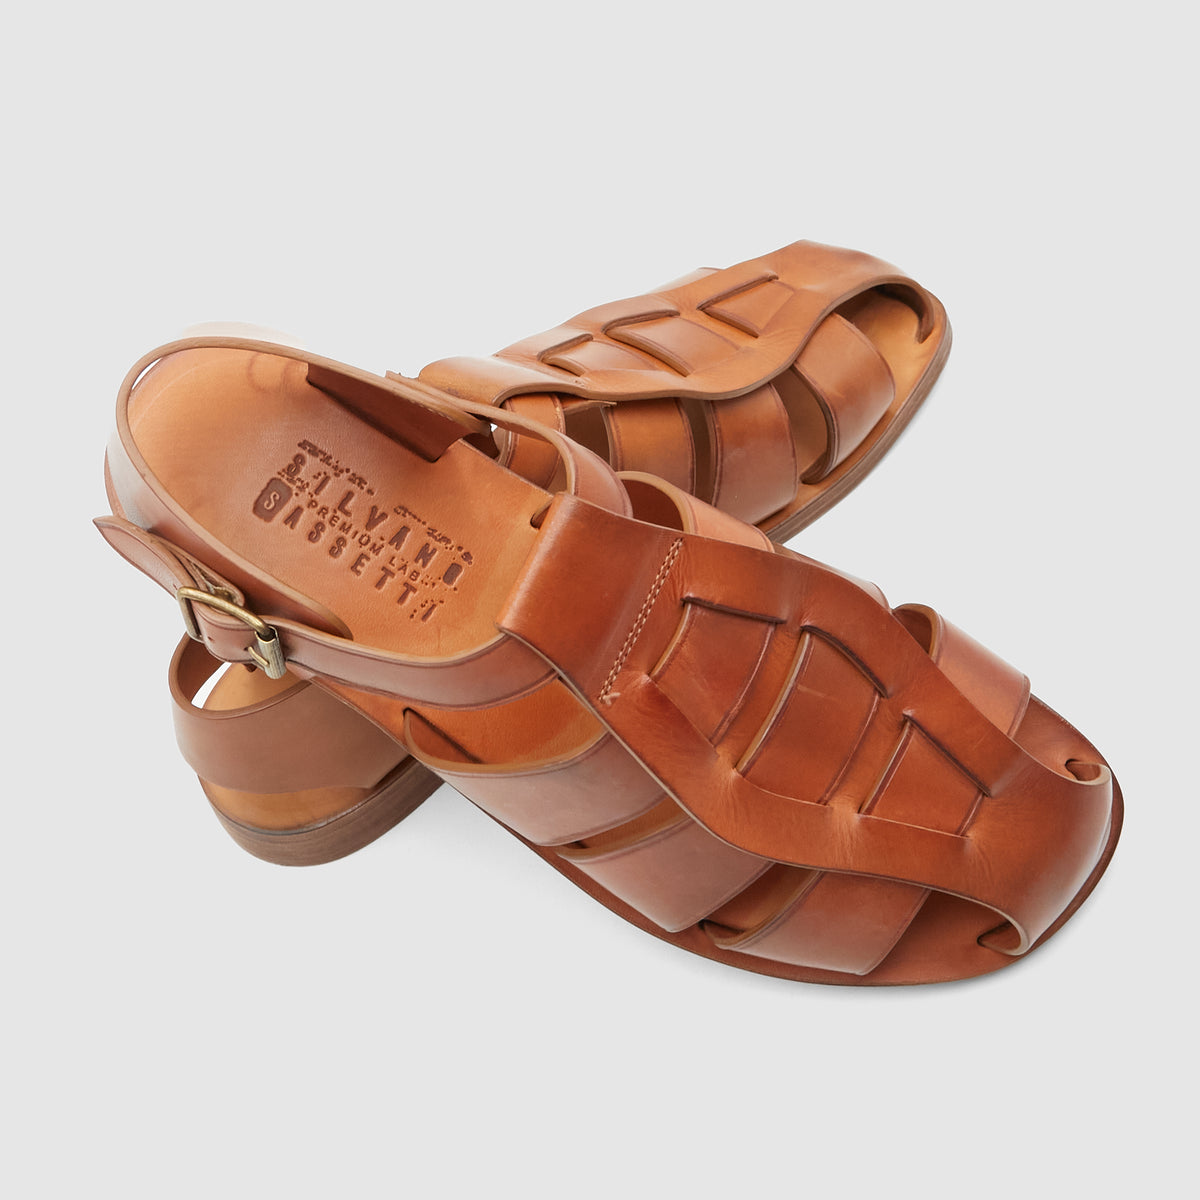 Silvano Sassetti  Leather Sandals